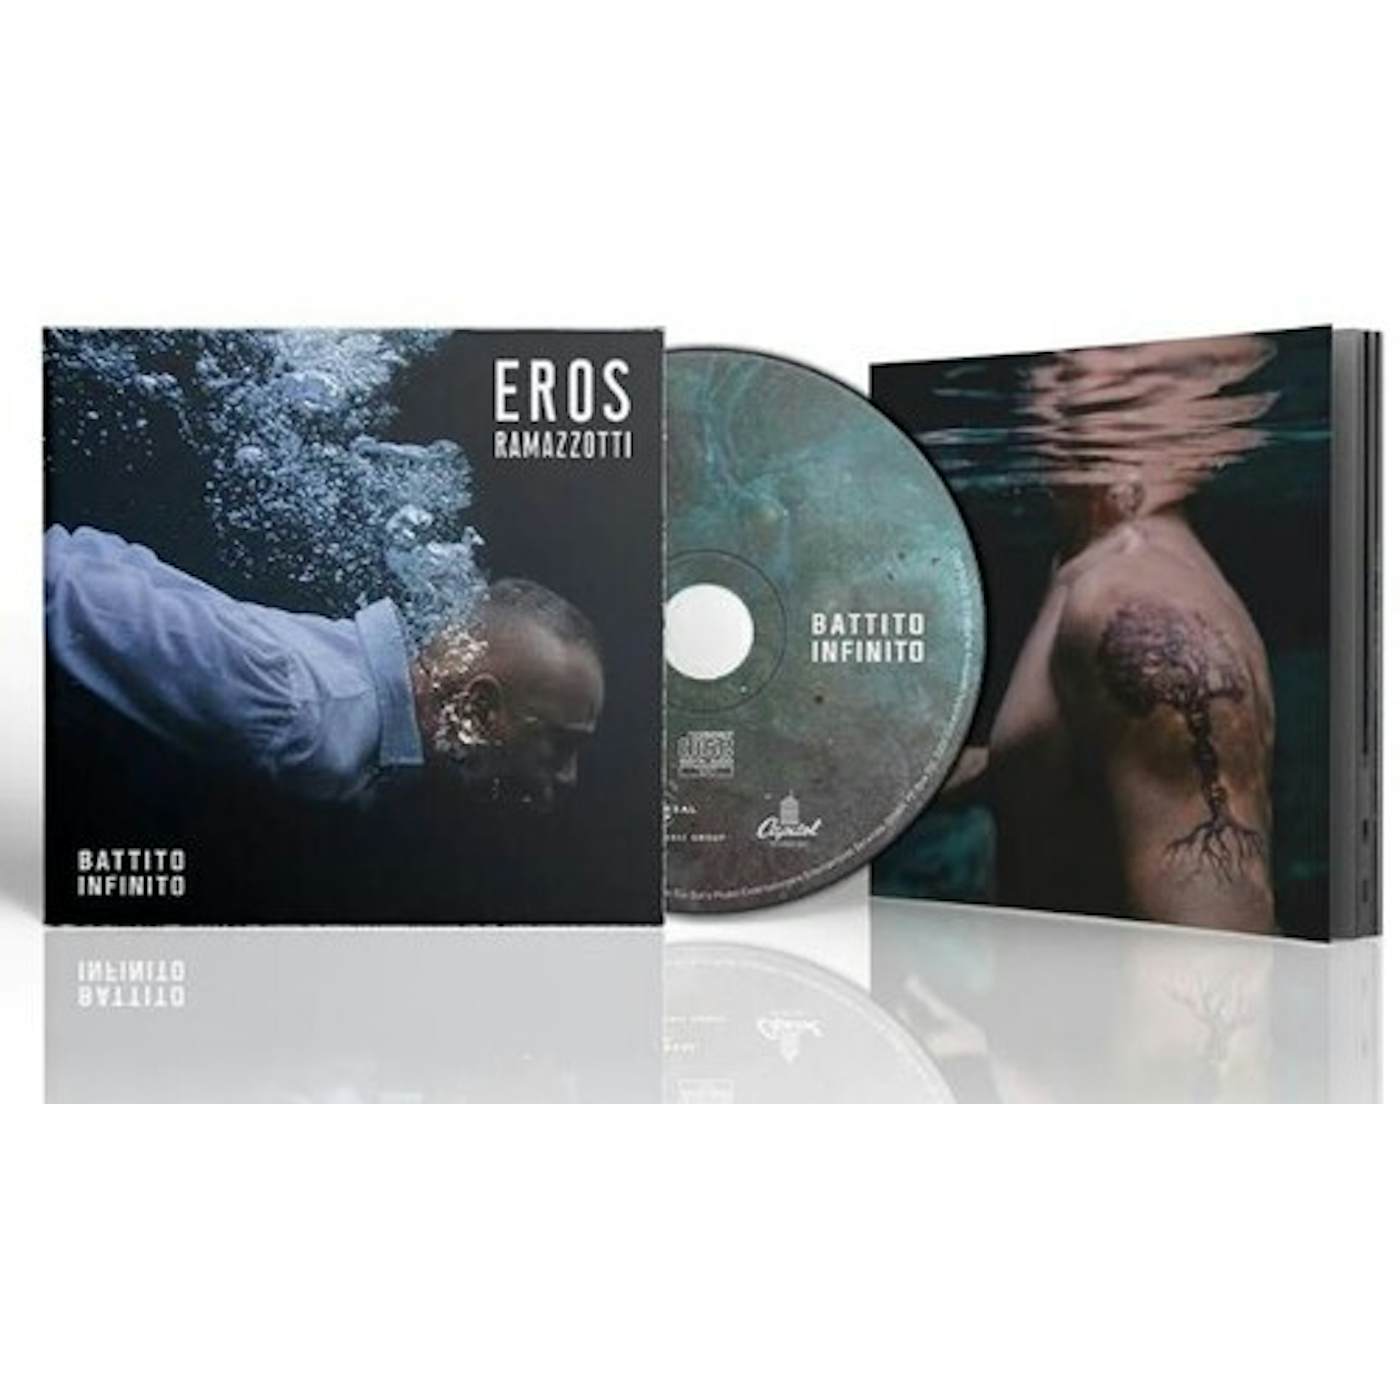 Eros Ramazzotti BATTITO INFINITO CD